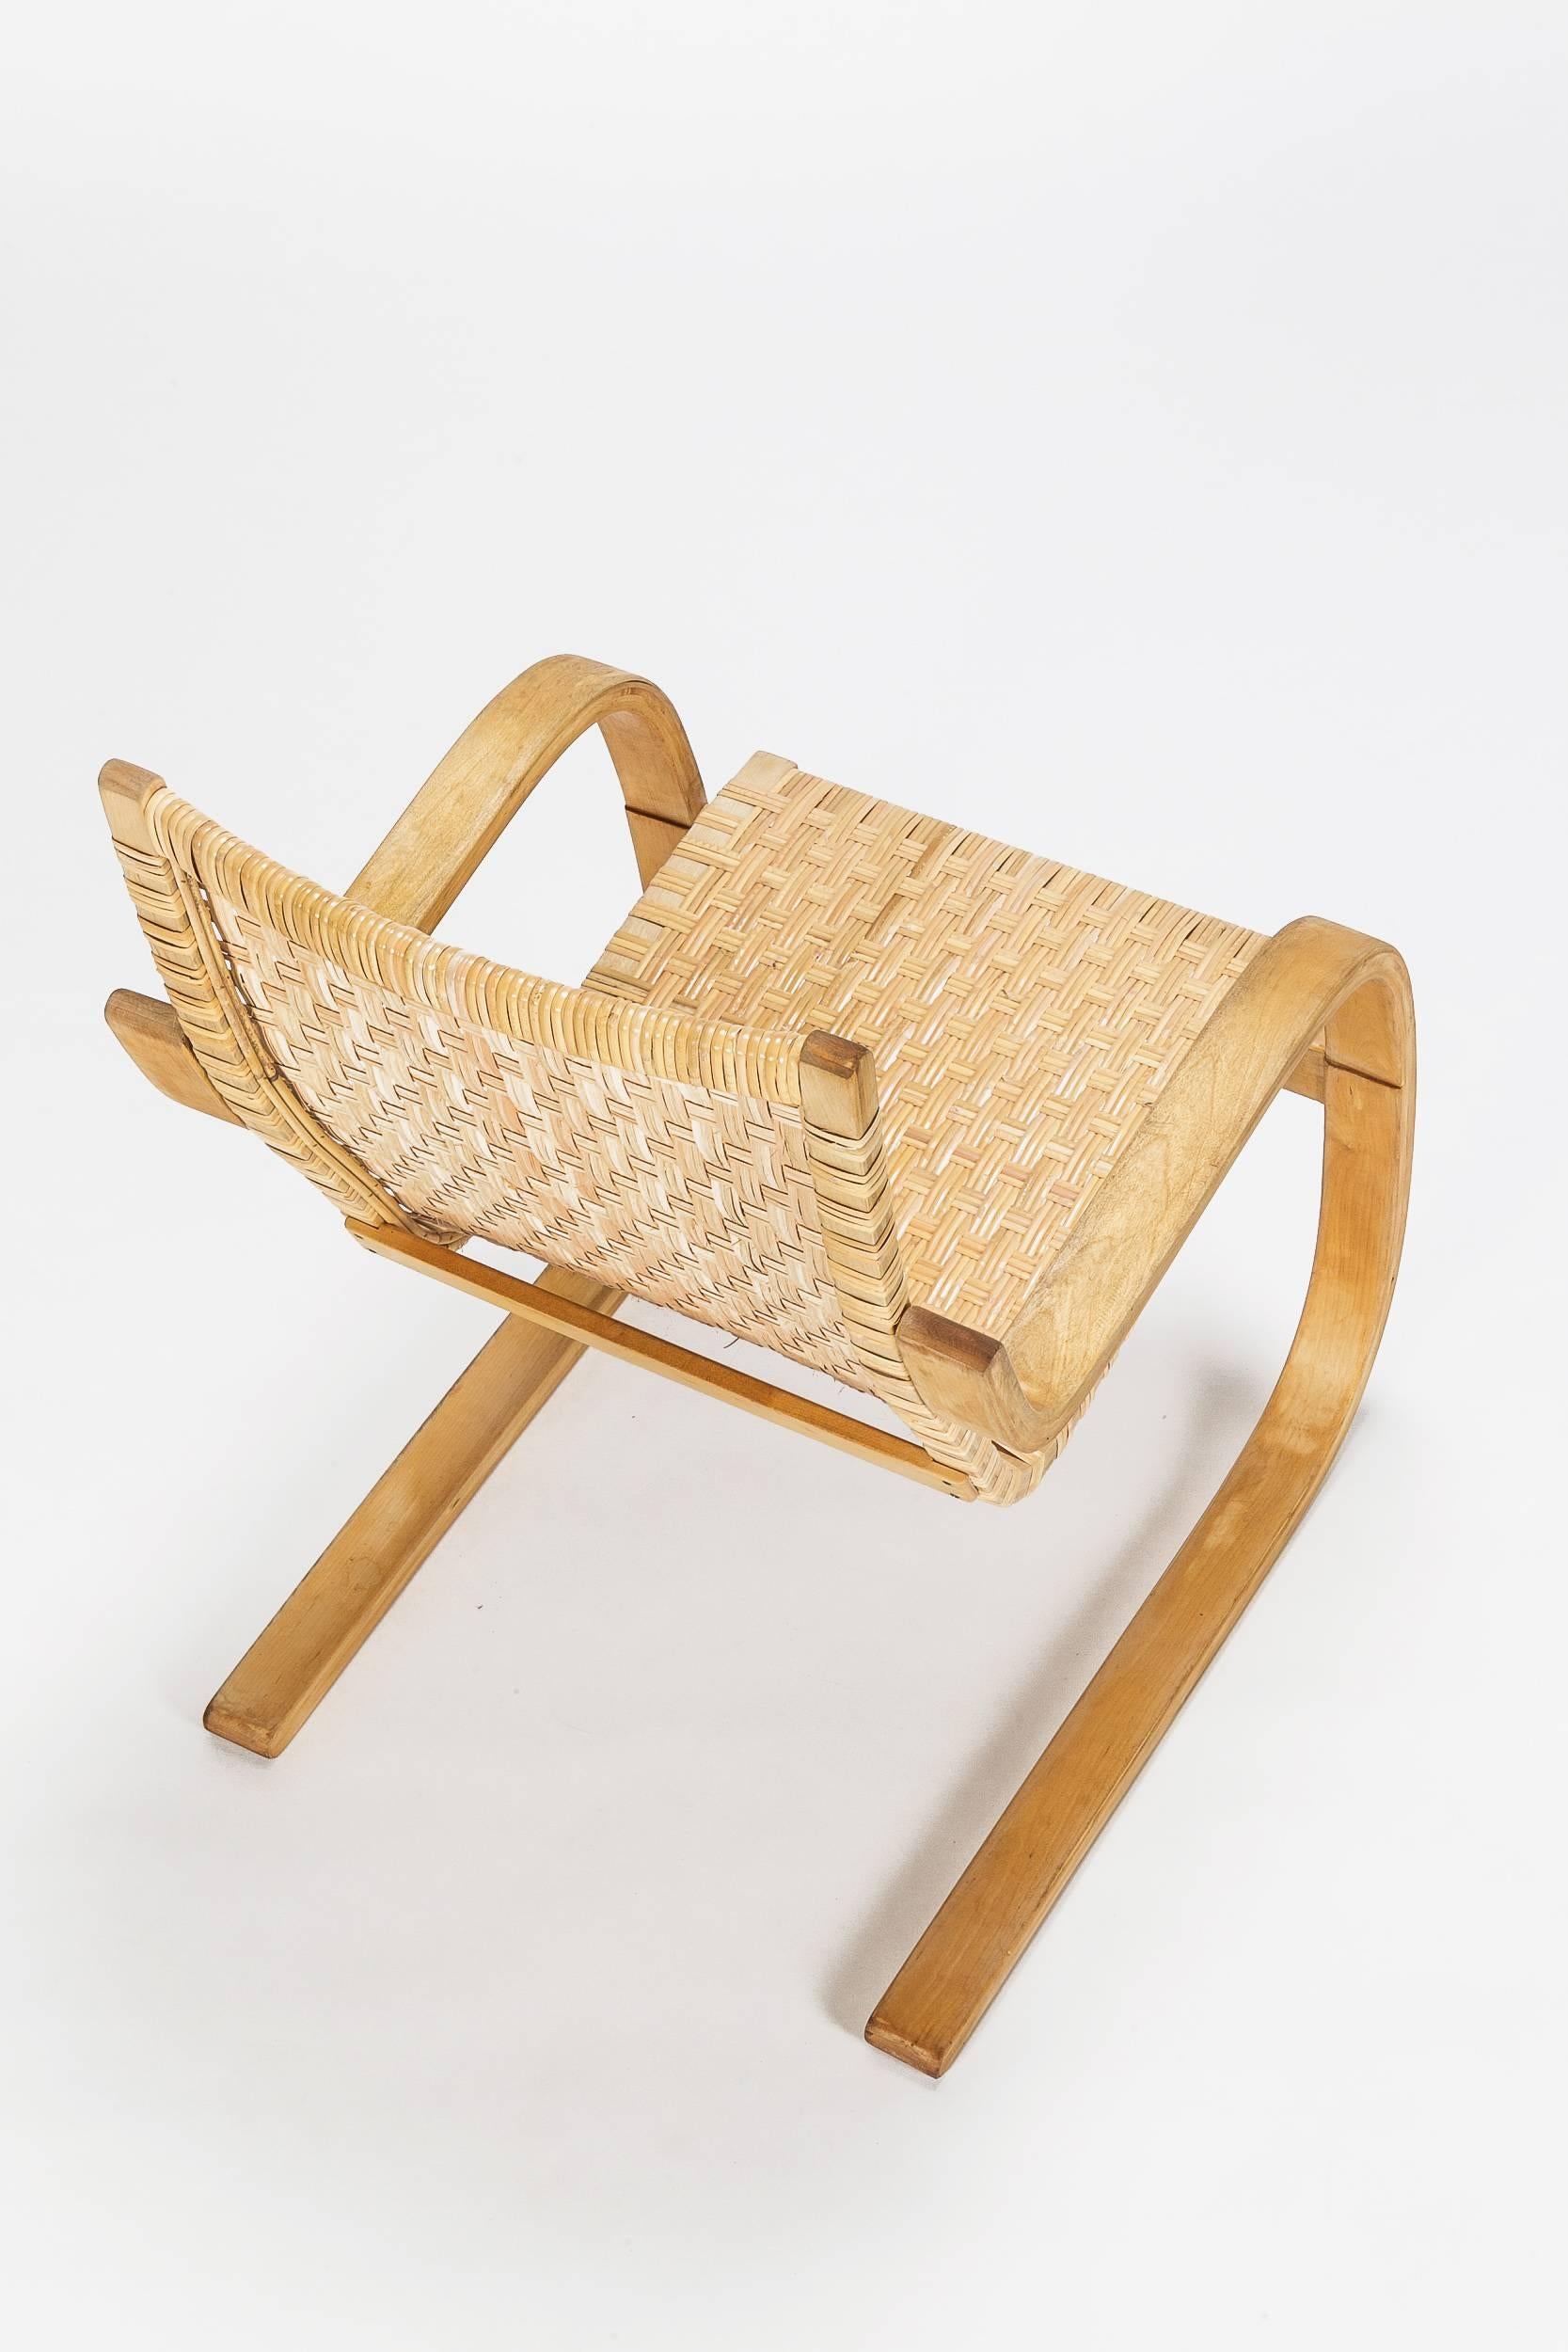 Mid-Century Modern Alvar Aalto Cantilever Chair 406 by Artek in Birch and Cane Webbing